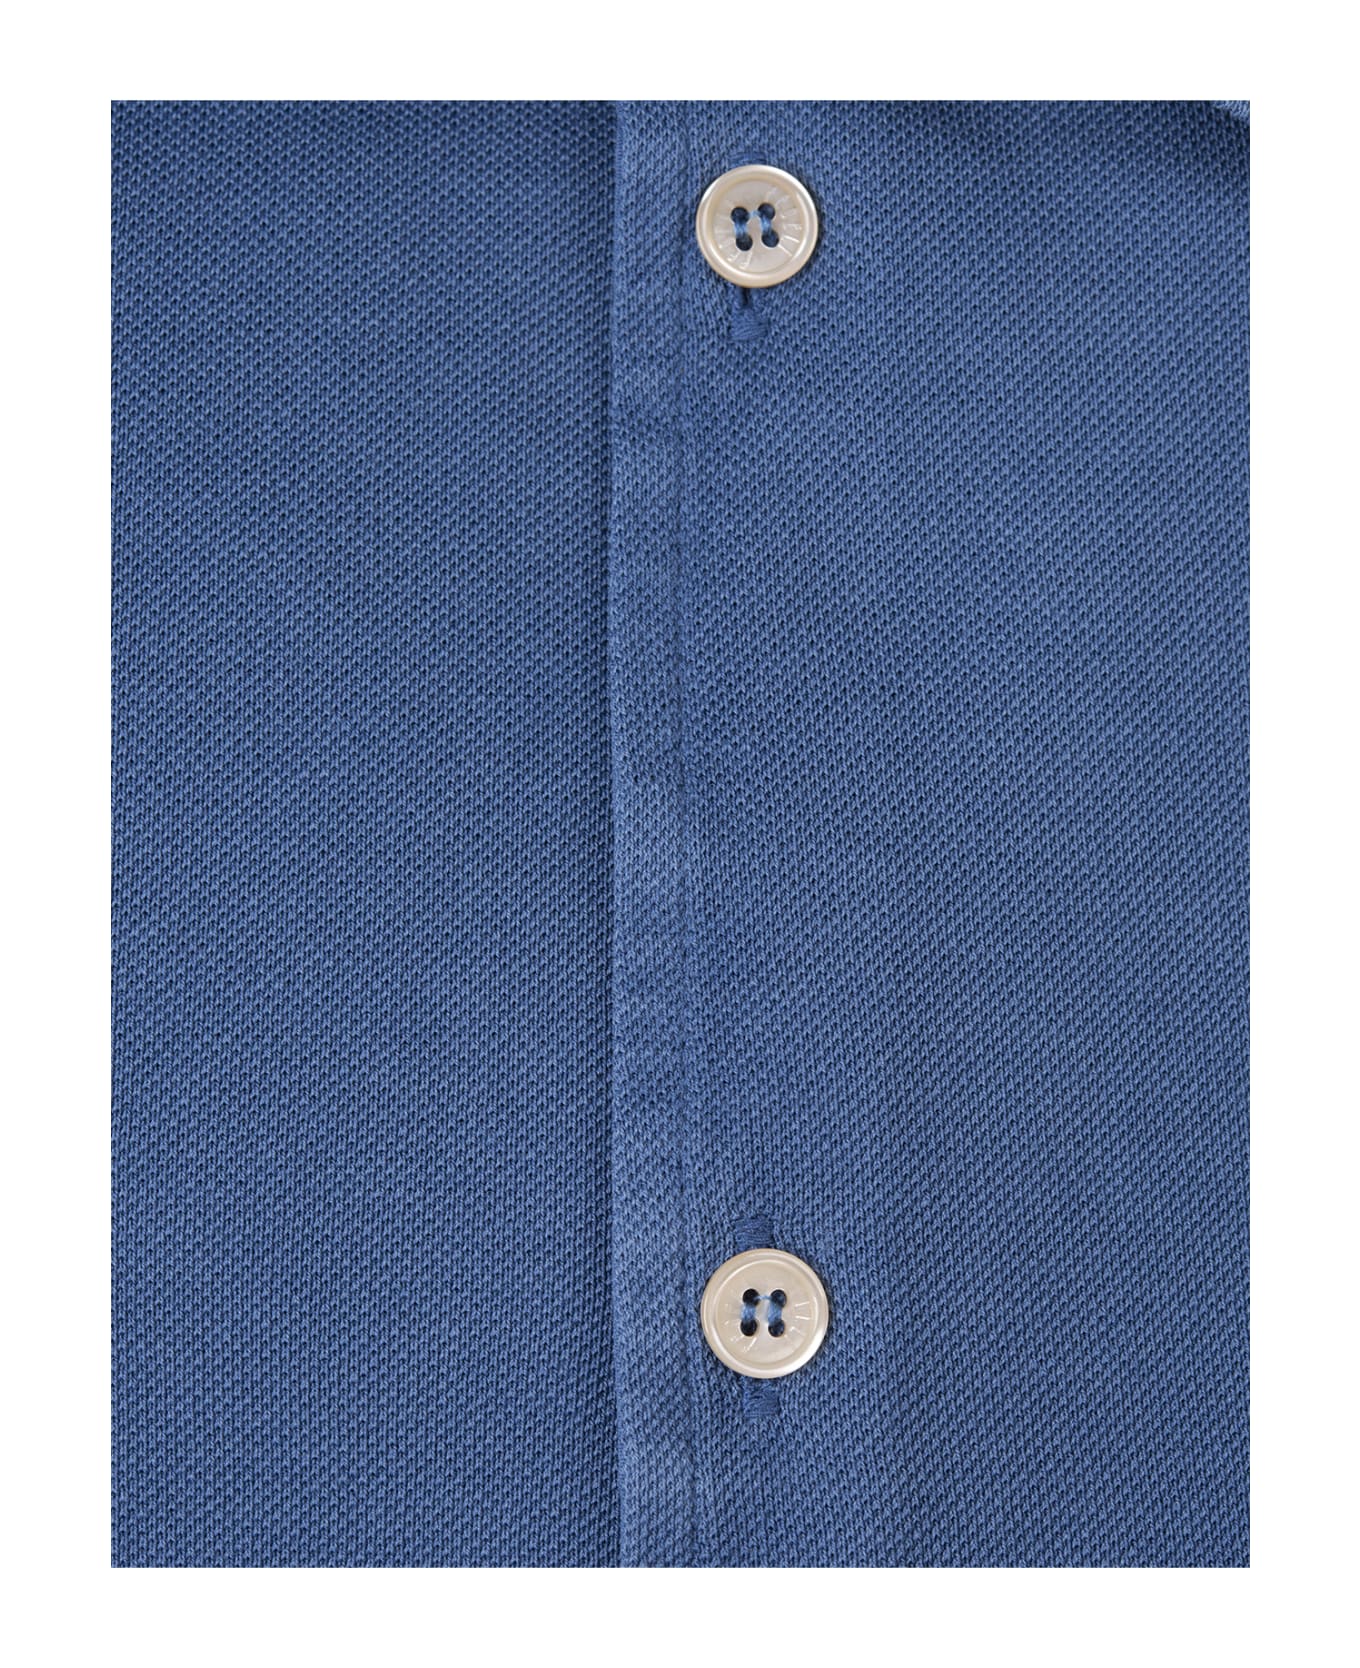 Fedeli Teorema Shirt In Cobalt Blue Cotton Piqué - Blue